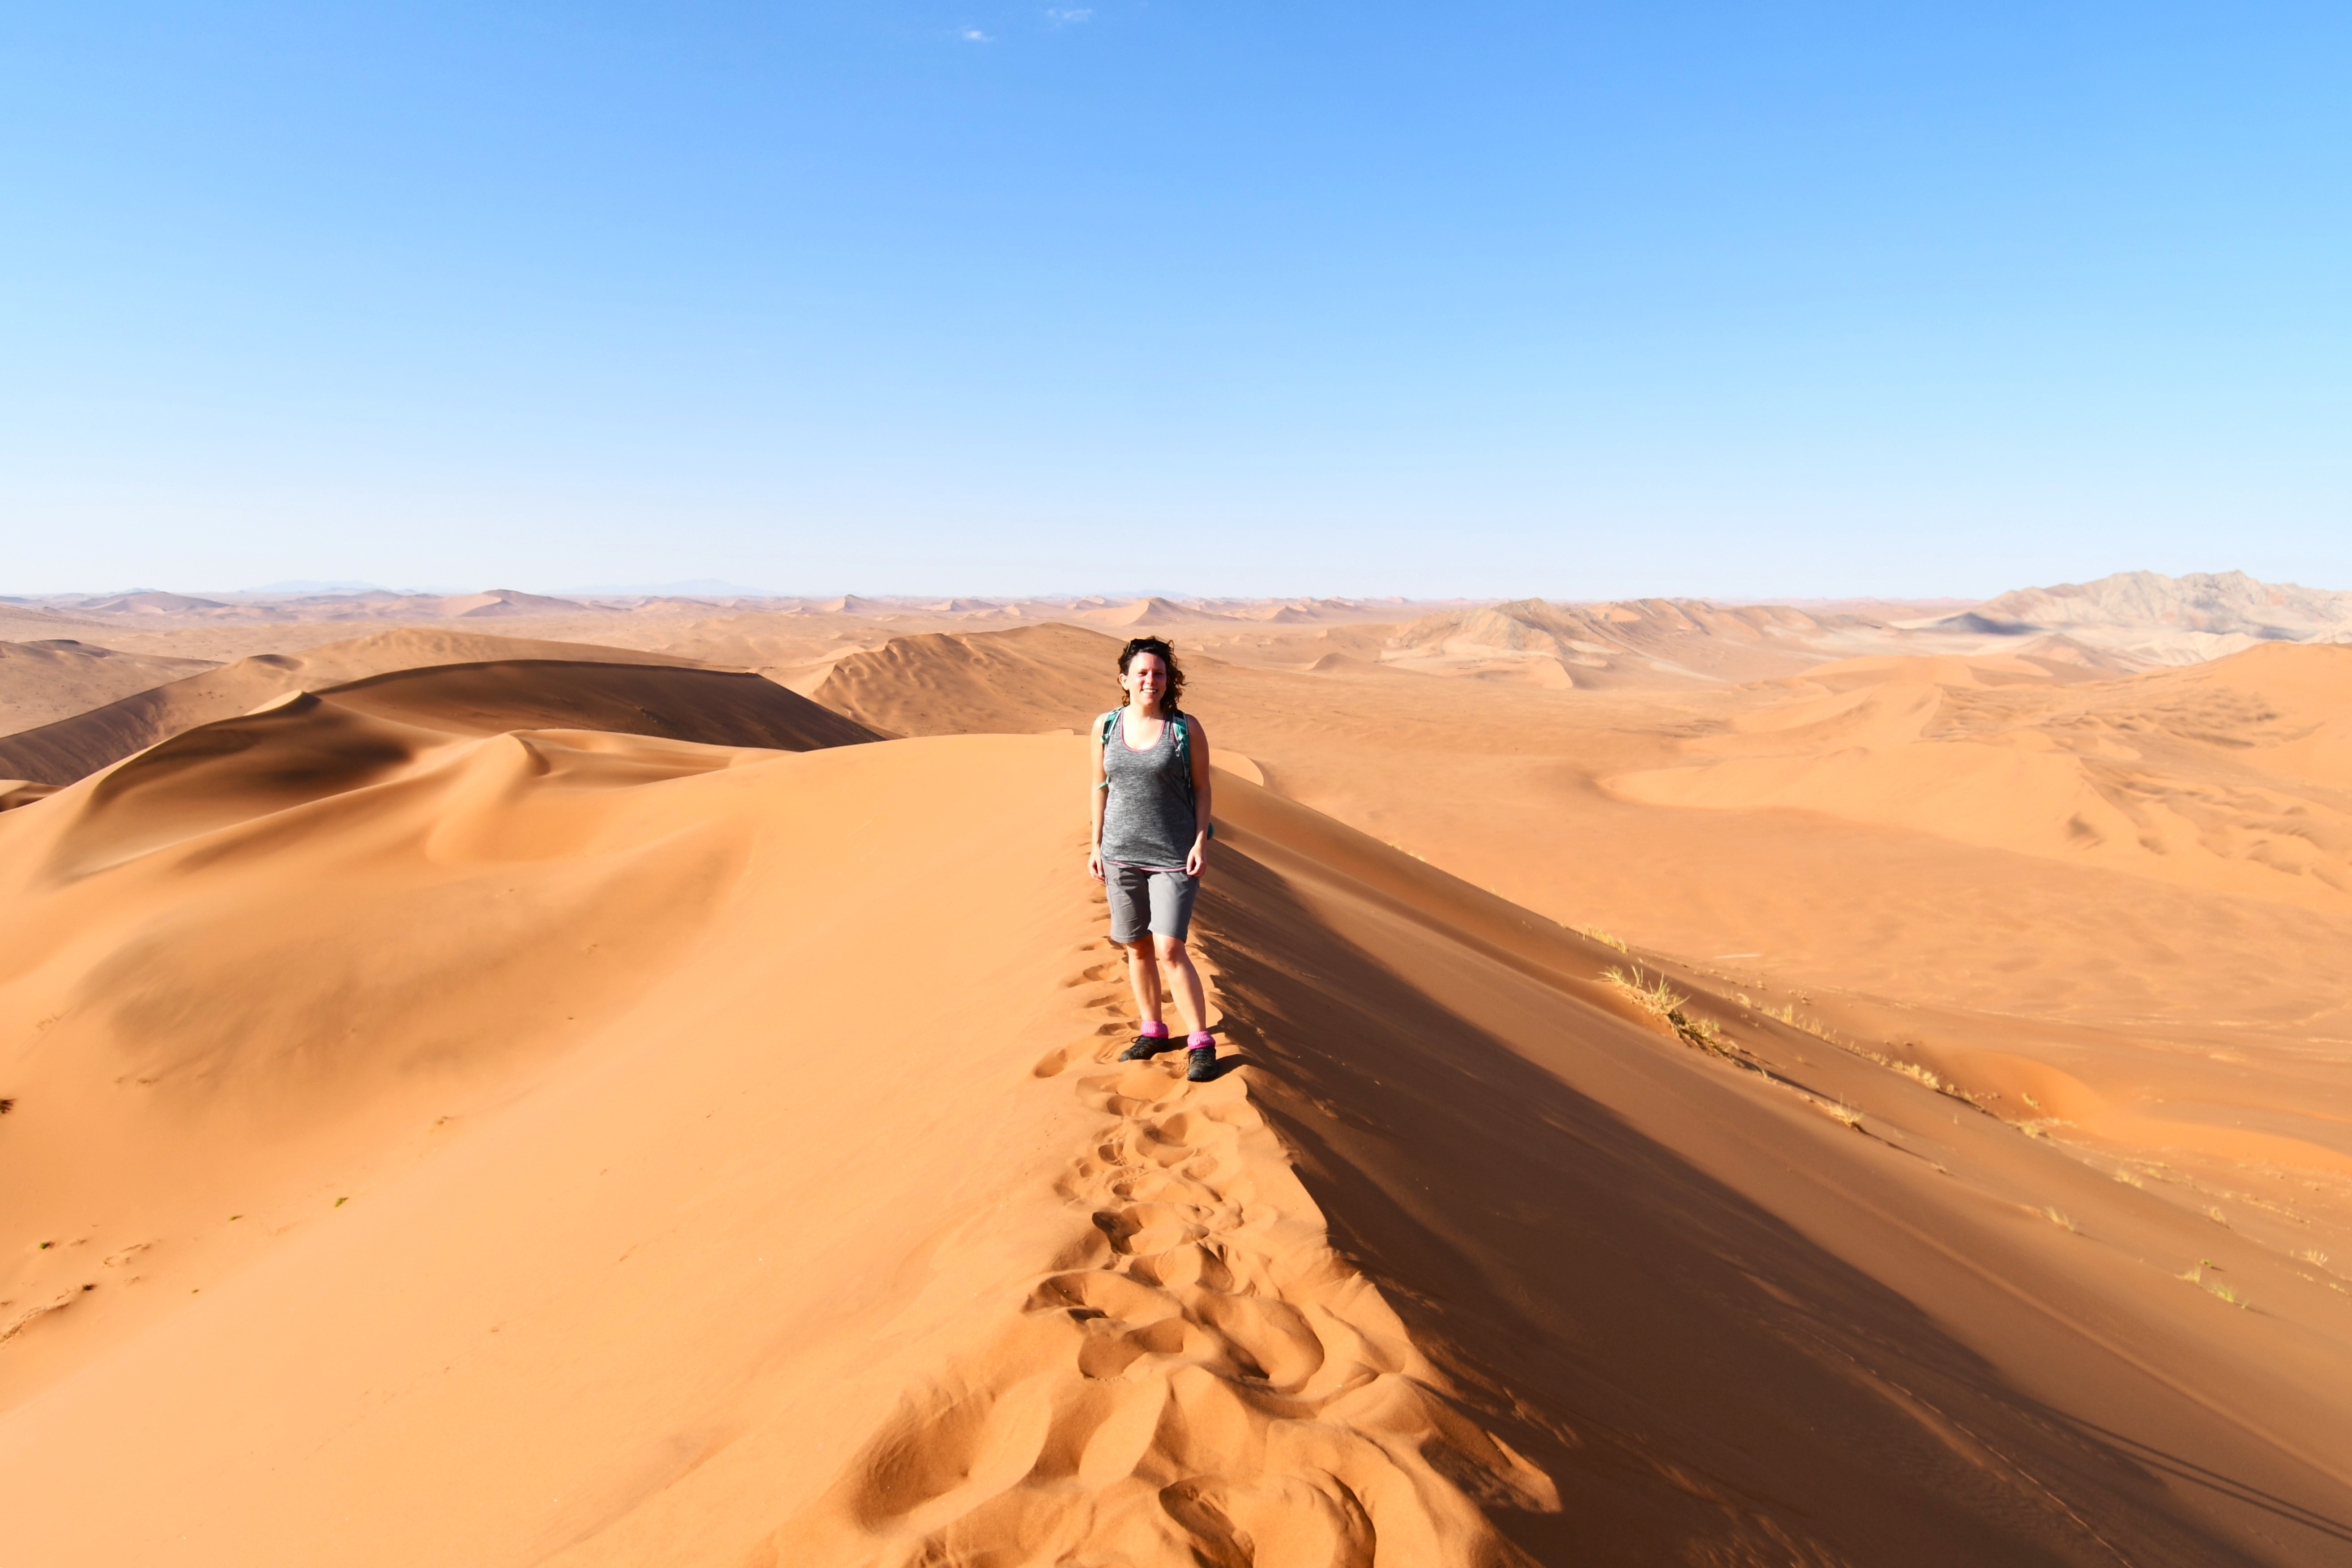 Jo on sand dunes in Nambia, African Desert